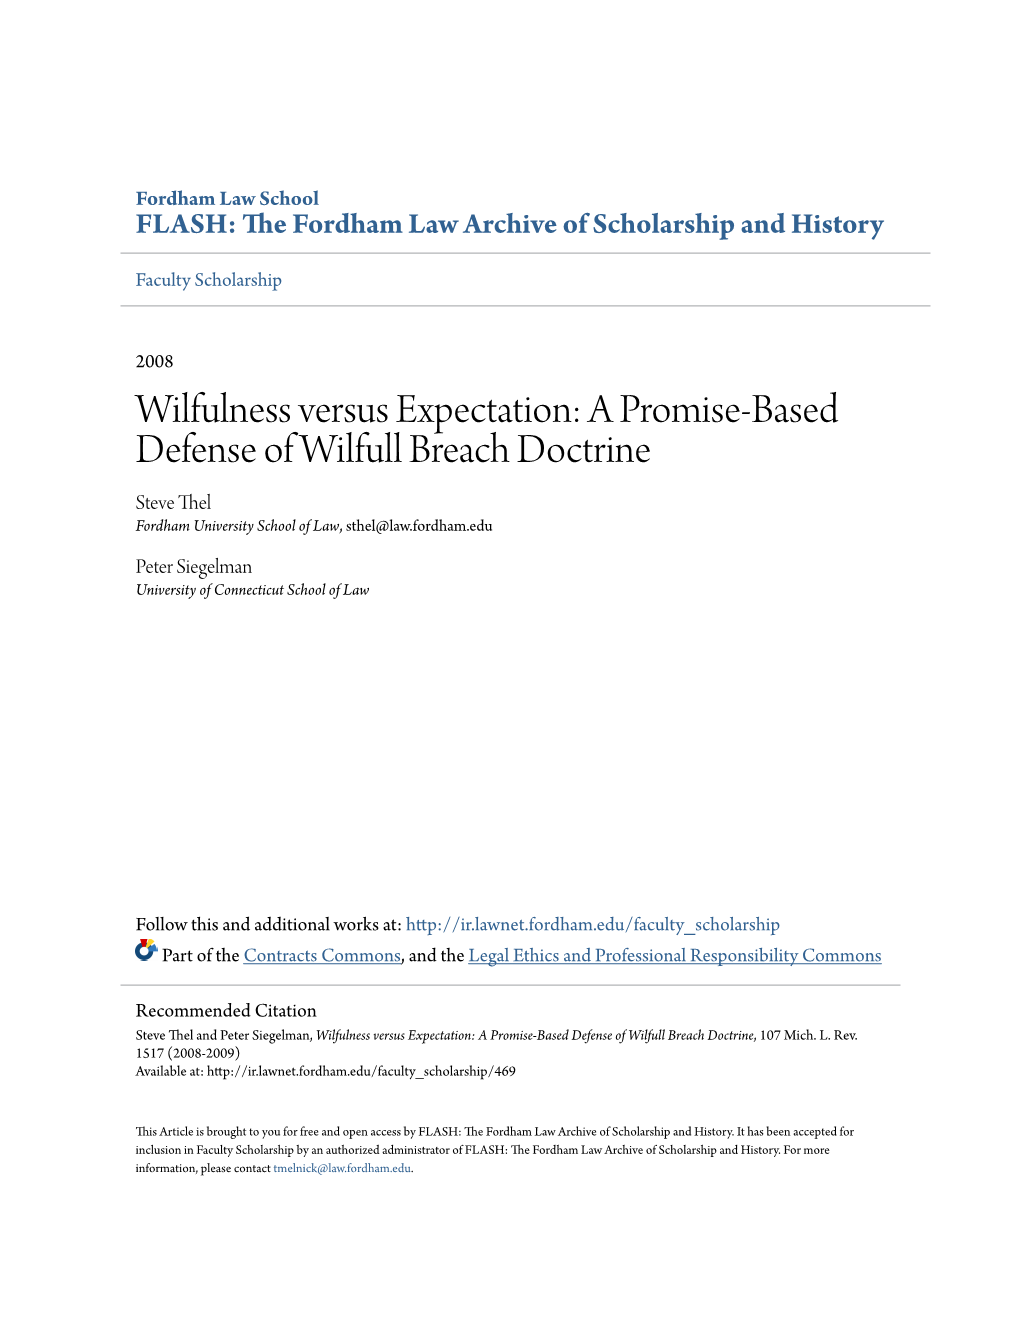 A Promise-Based Defense of Wilfull Breach Doctrine Steve Thel Fordham University School of Law, Sthel@Law.Fordham.Edu